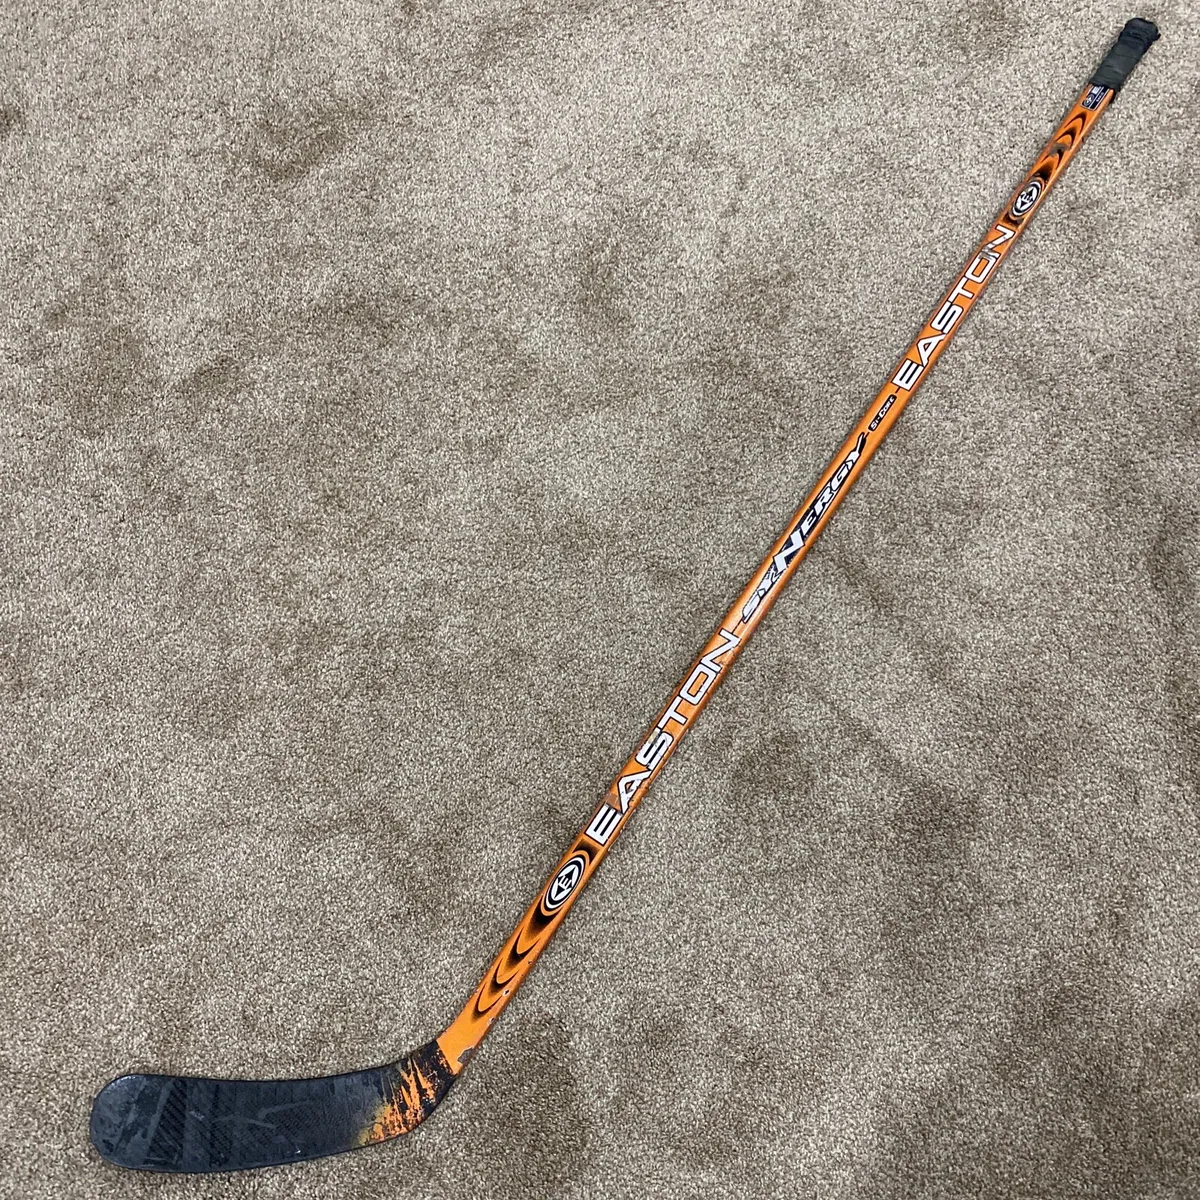 new easton synergy hockey stick